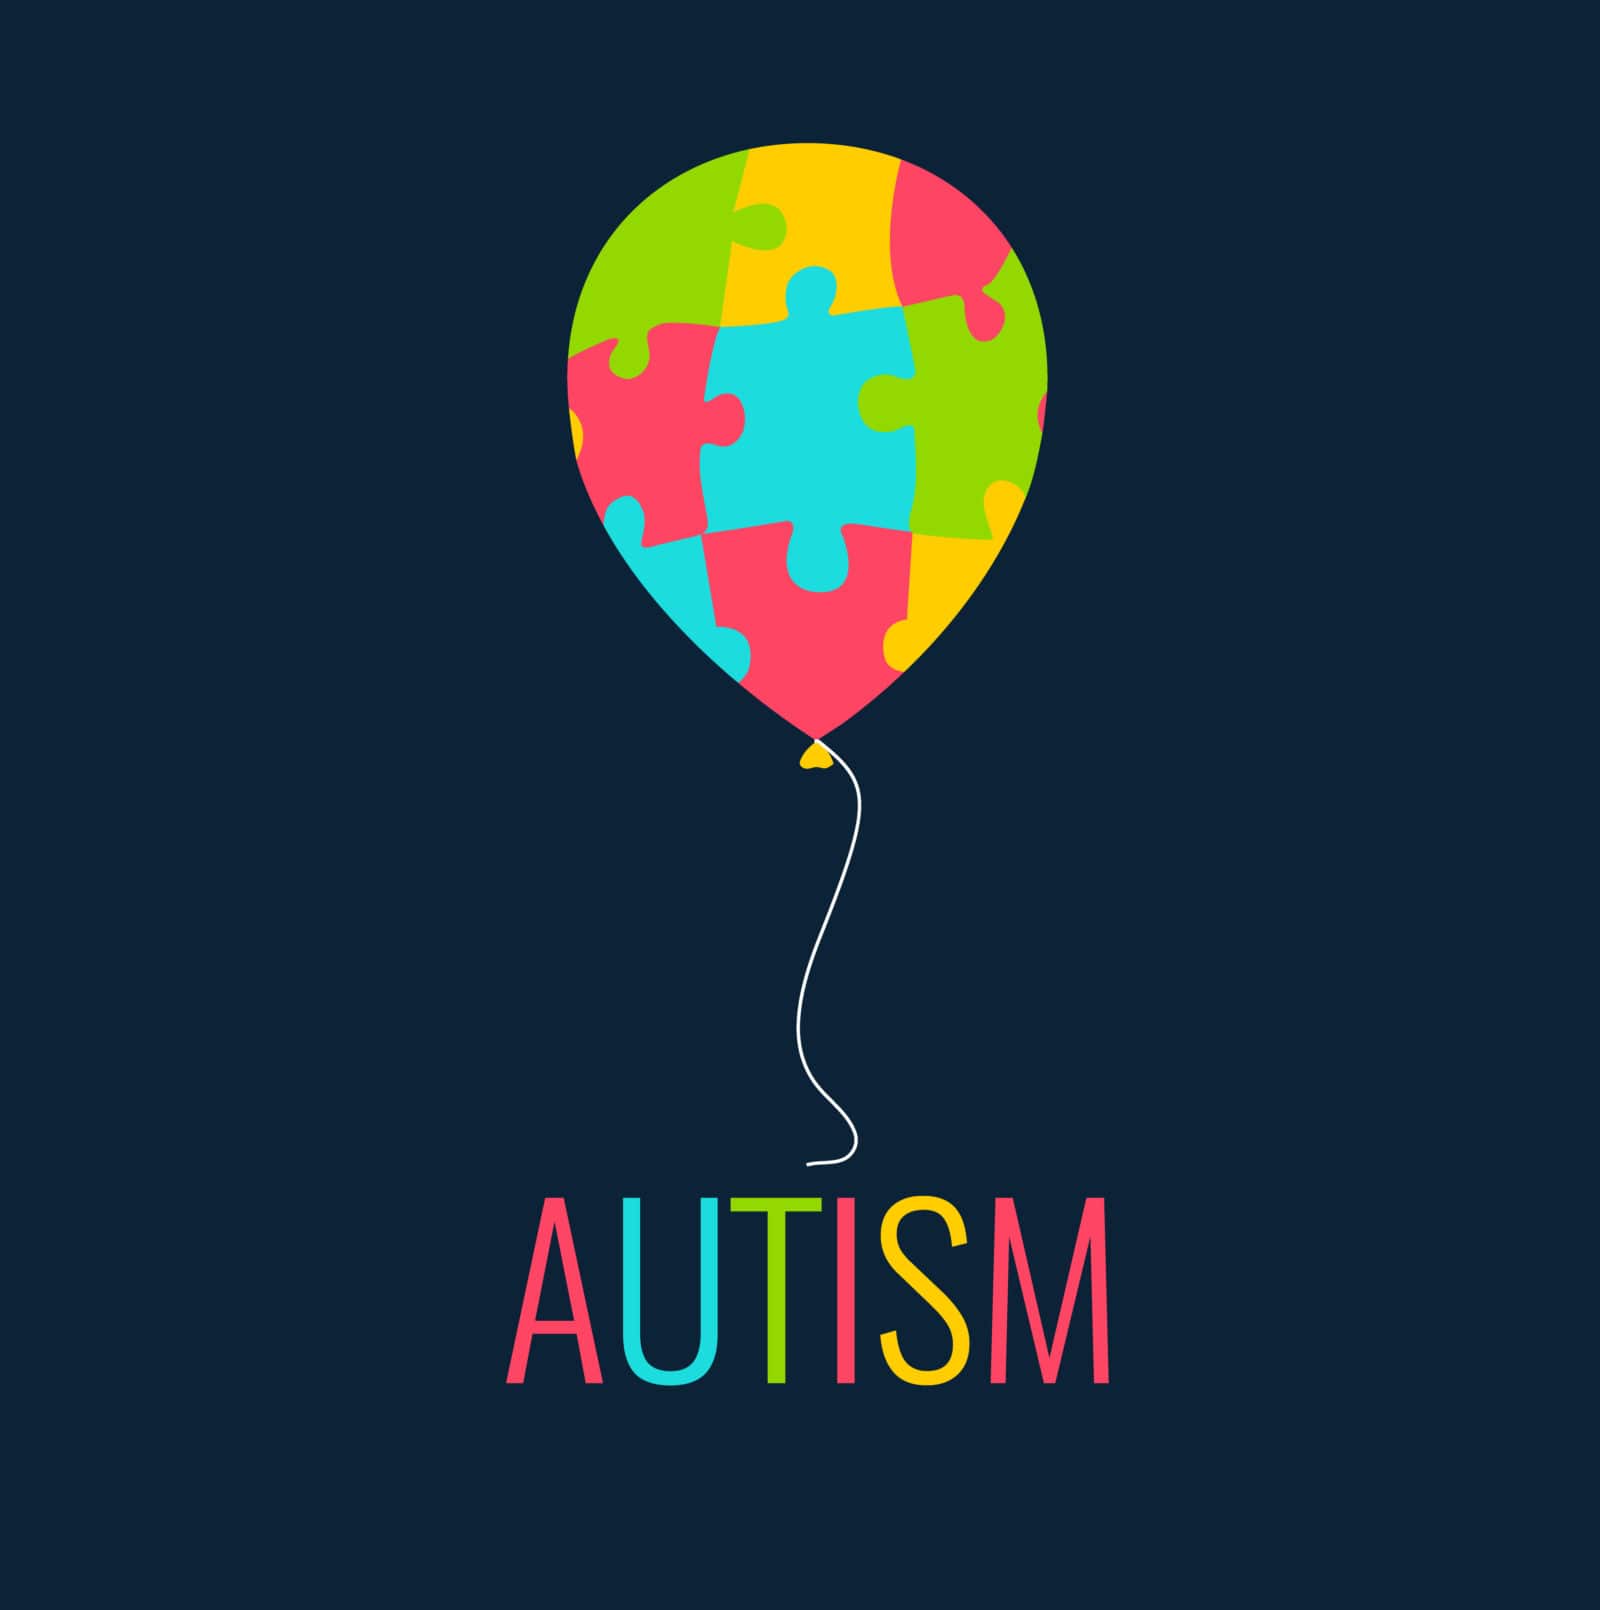 Autism Awareness Desktop Background. Autism Wallpaper, Autism Ribbon Wallpaper and Downloadable Autism Wallpaper